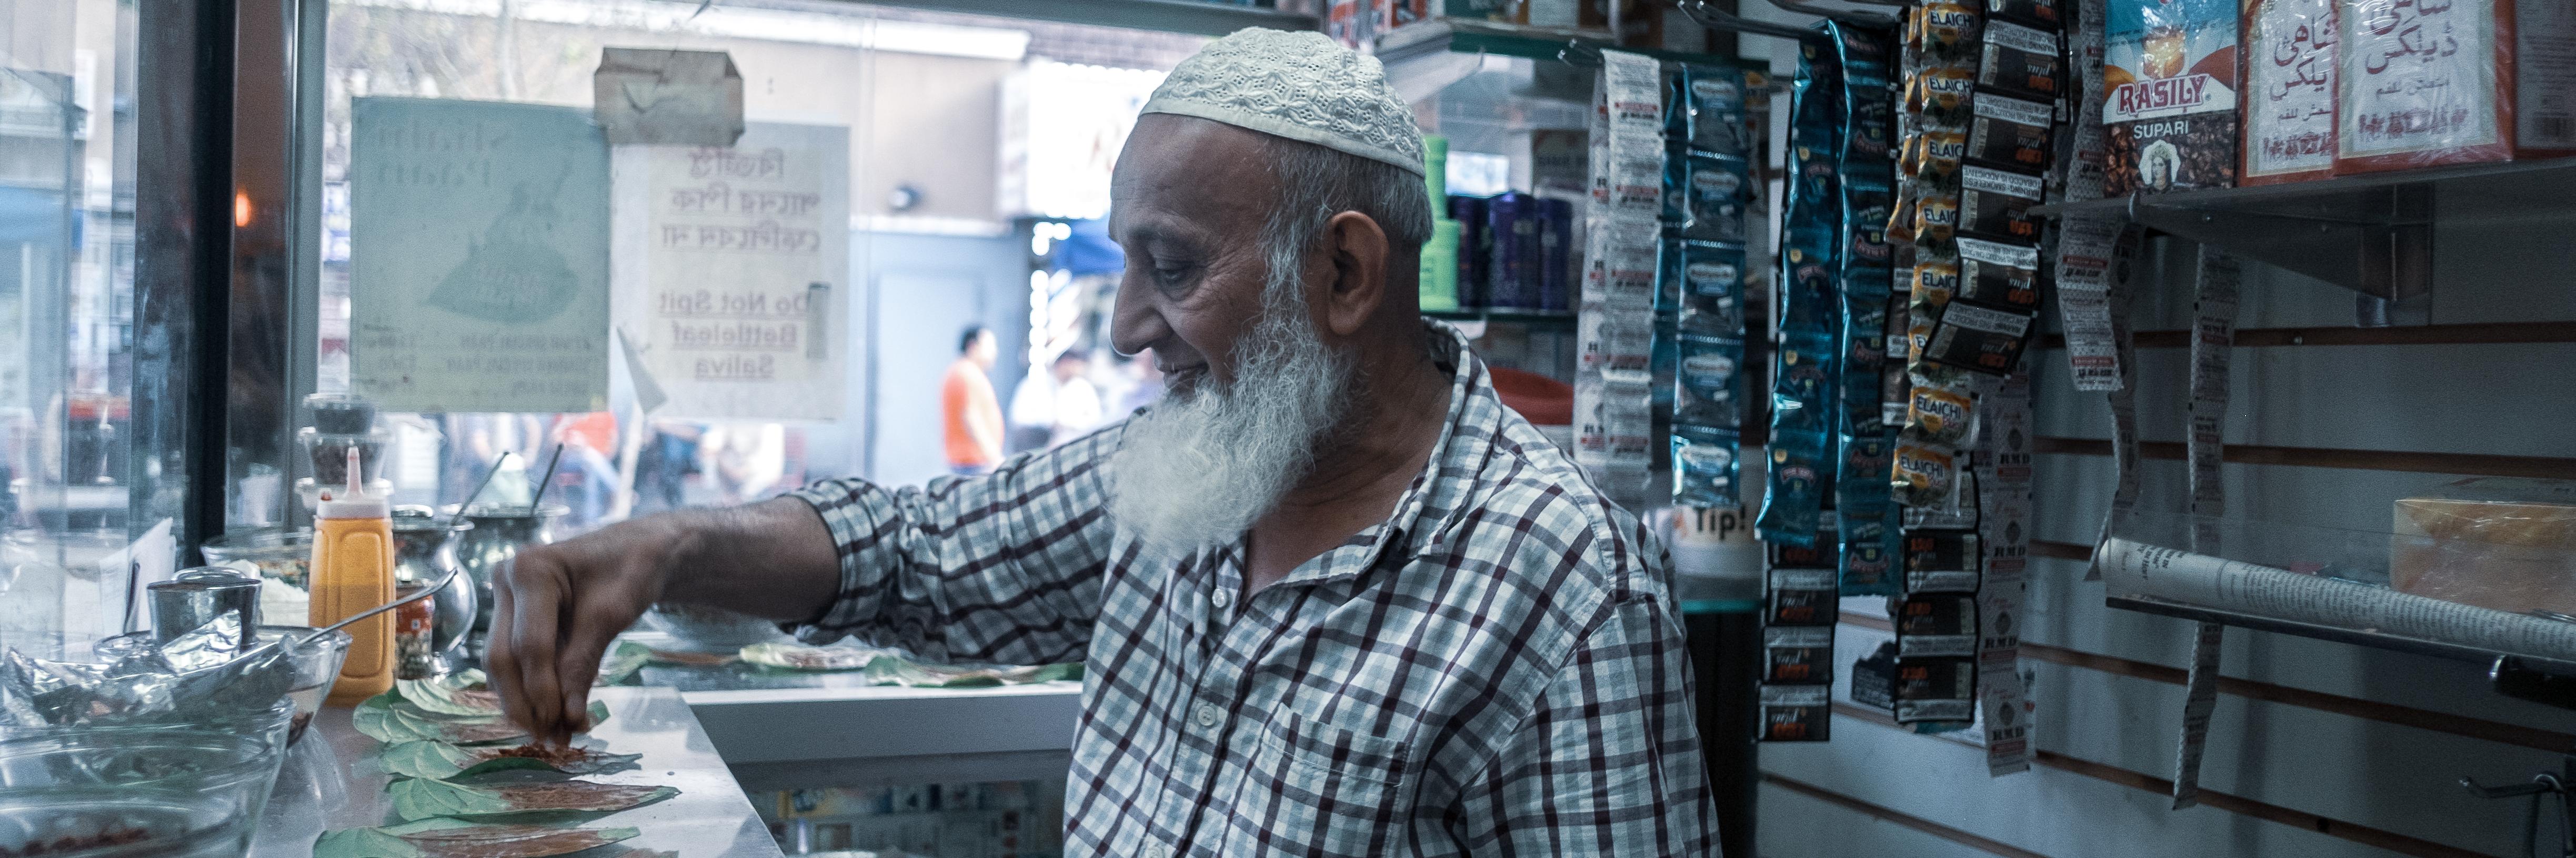 man preparing betel in small shop in New York City